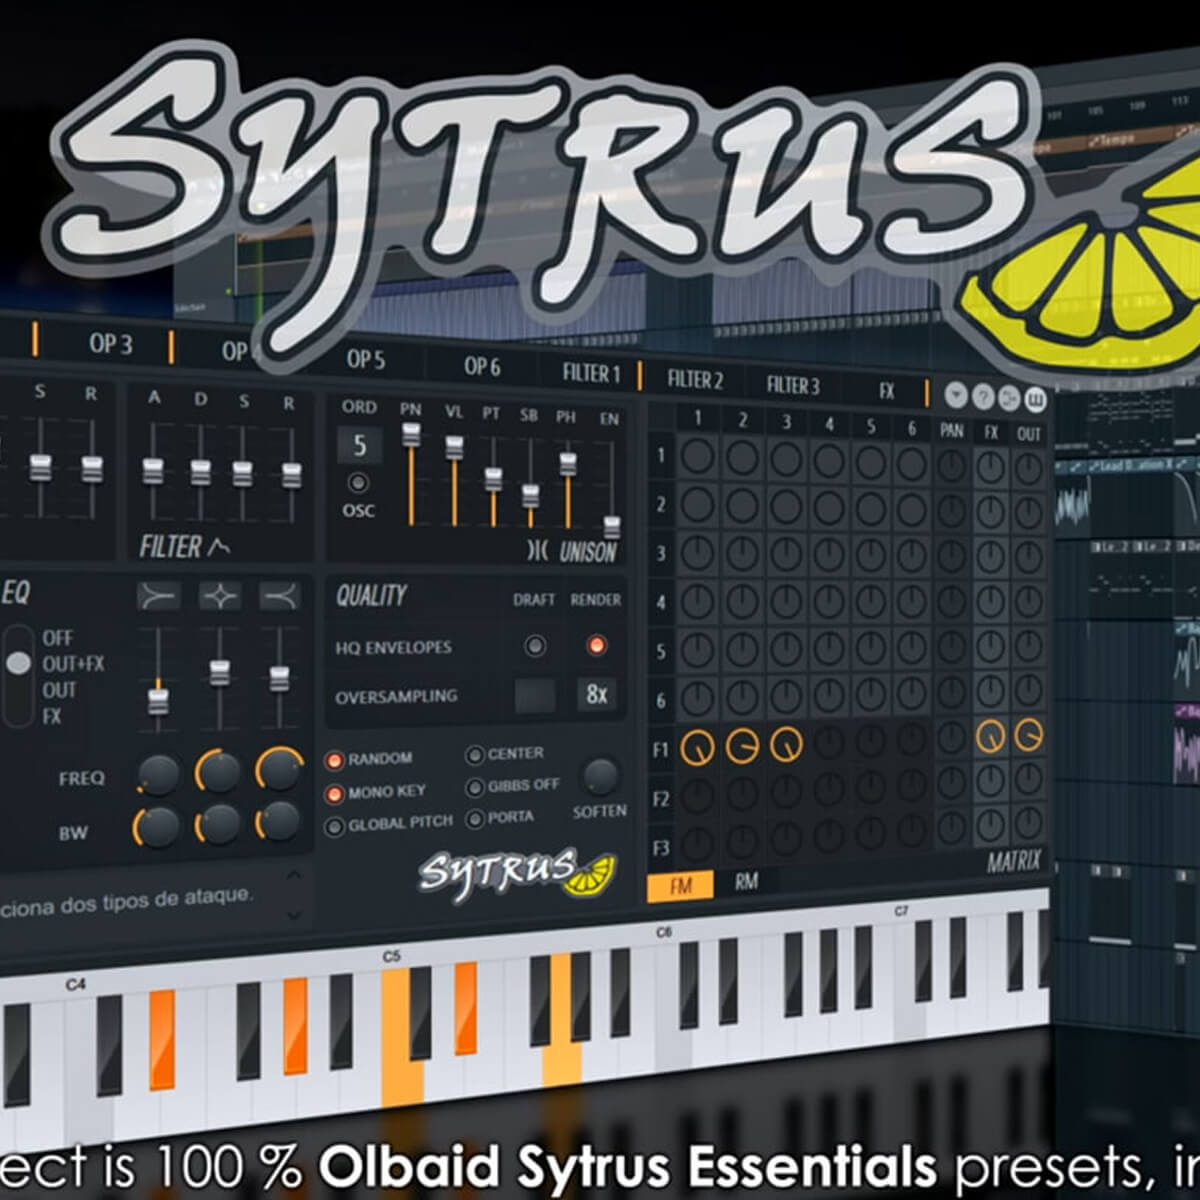 Olbaid Sytrus Essentials